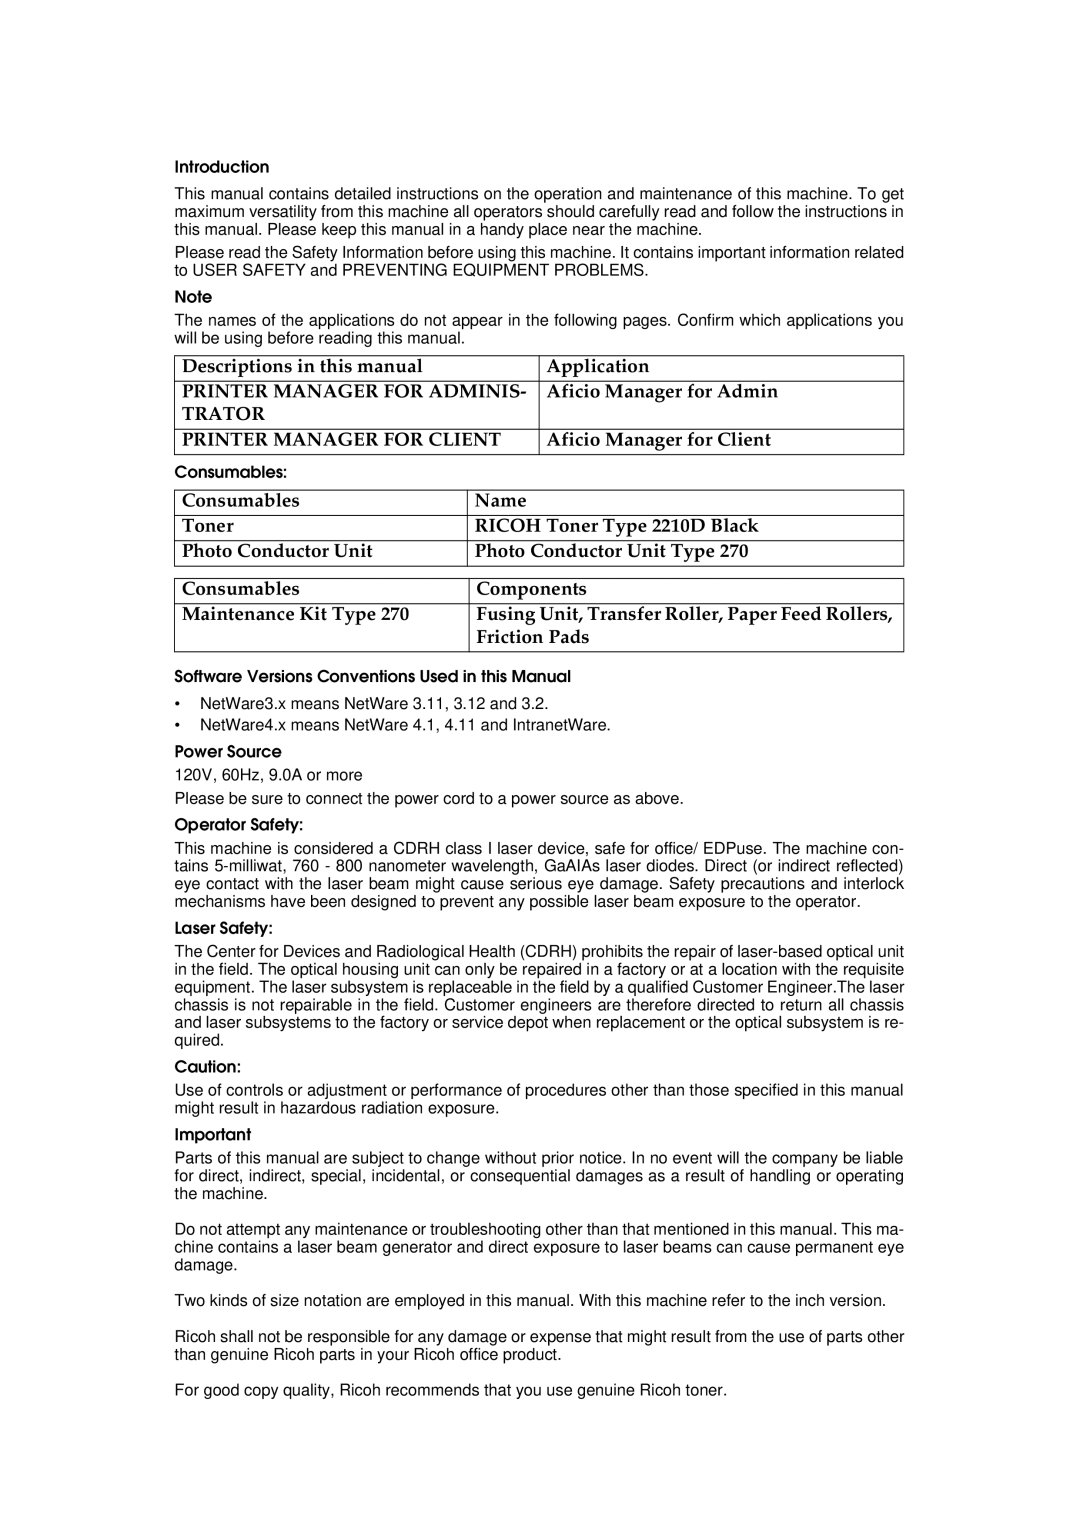 Ricoh Aficio AP2700 Descriptions in this manual, Application, Printer Manager For Adminis, Aficio Manager for Admin, Name 